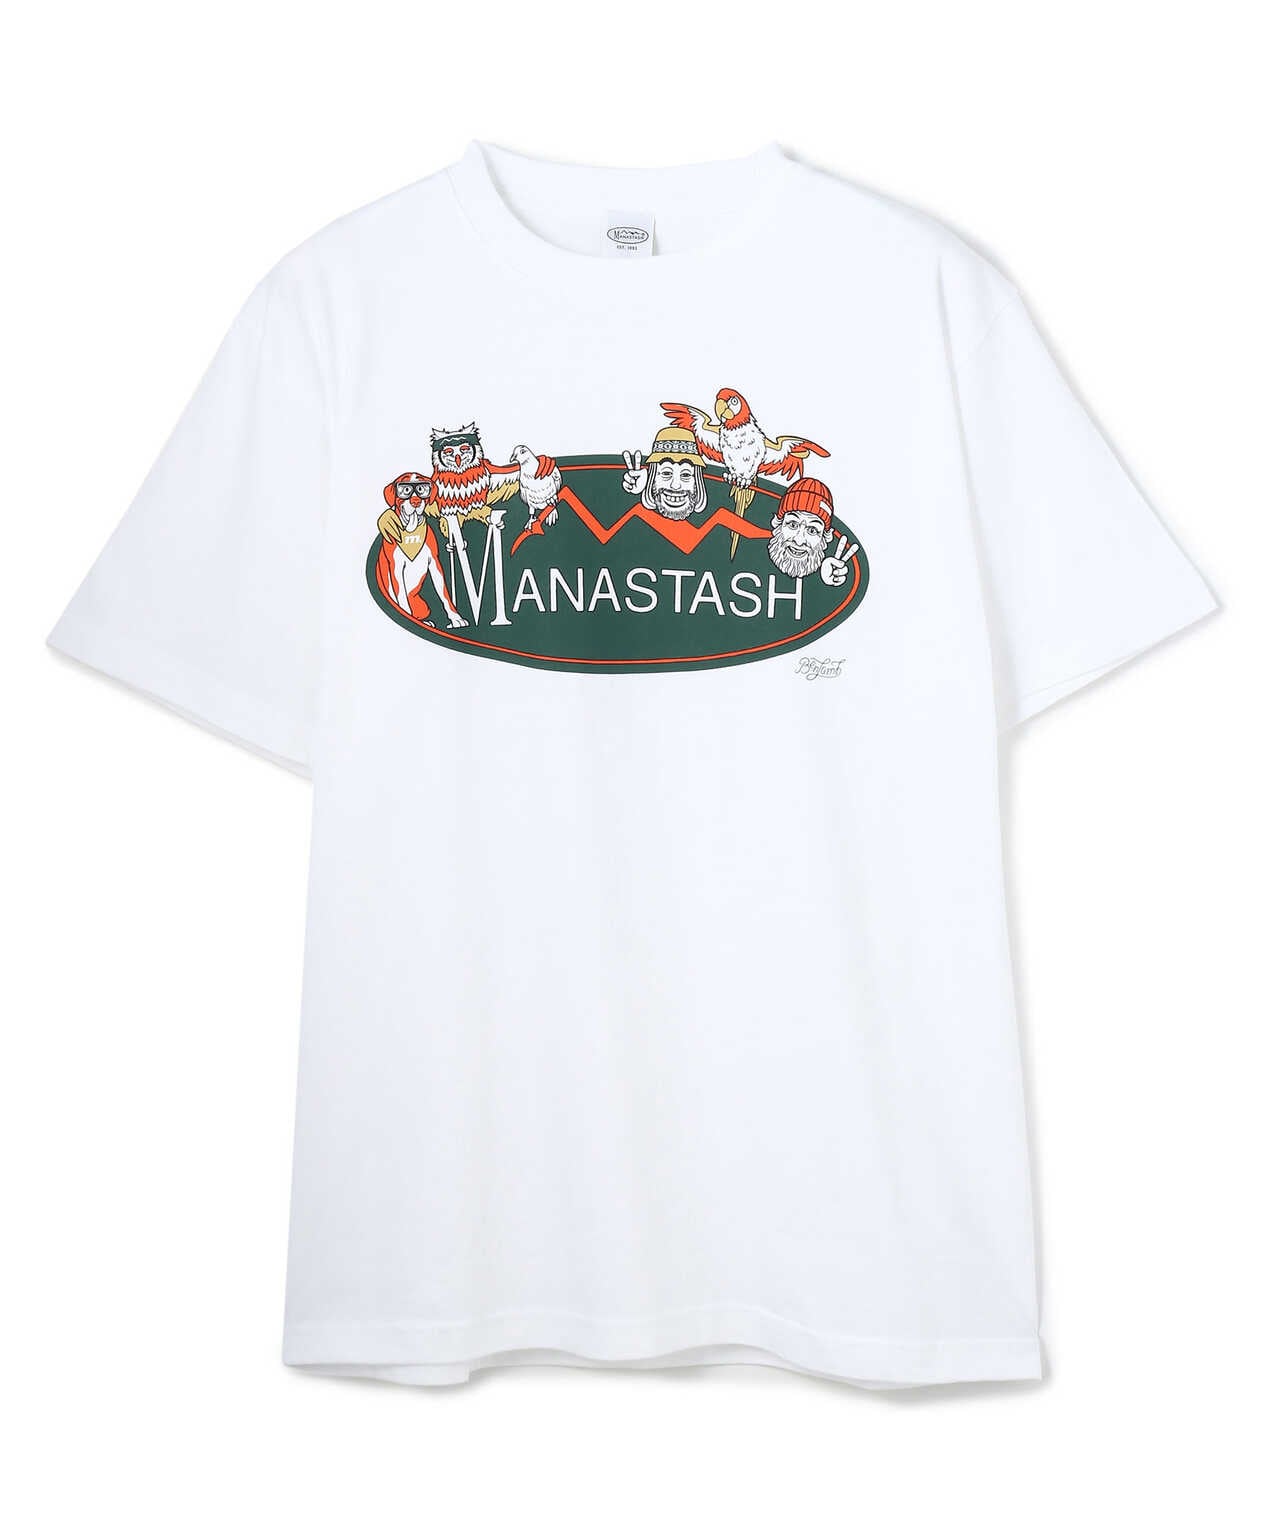 MANASTASH/マナスタッシュ/BENLAMB ORIGINAL LOGO TEE/ロゴTシャツ